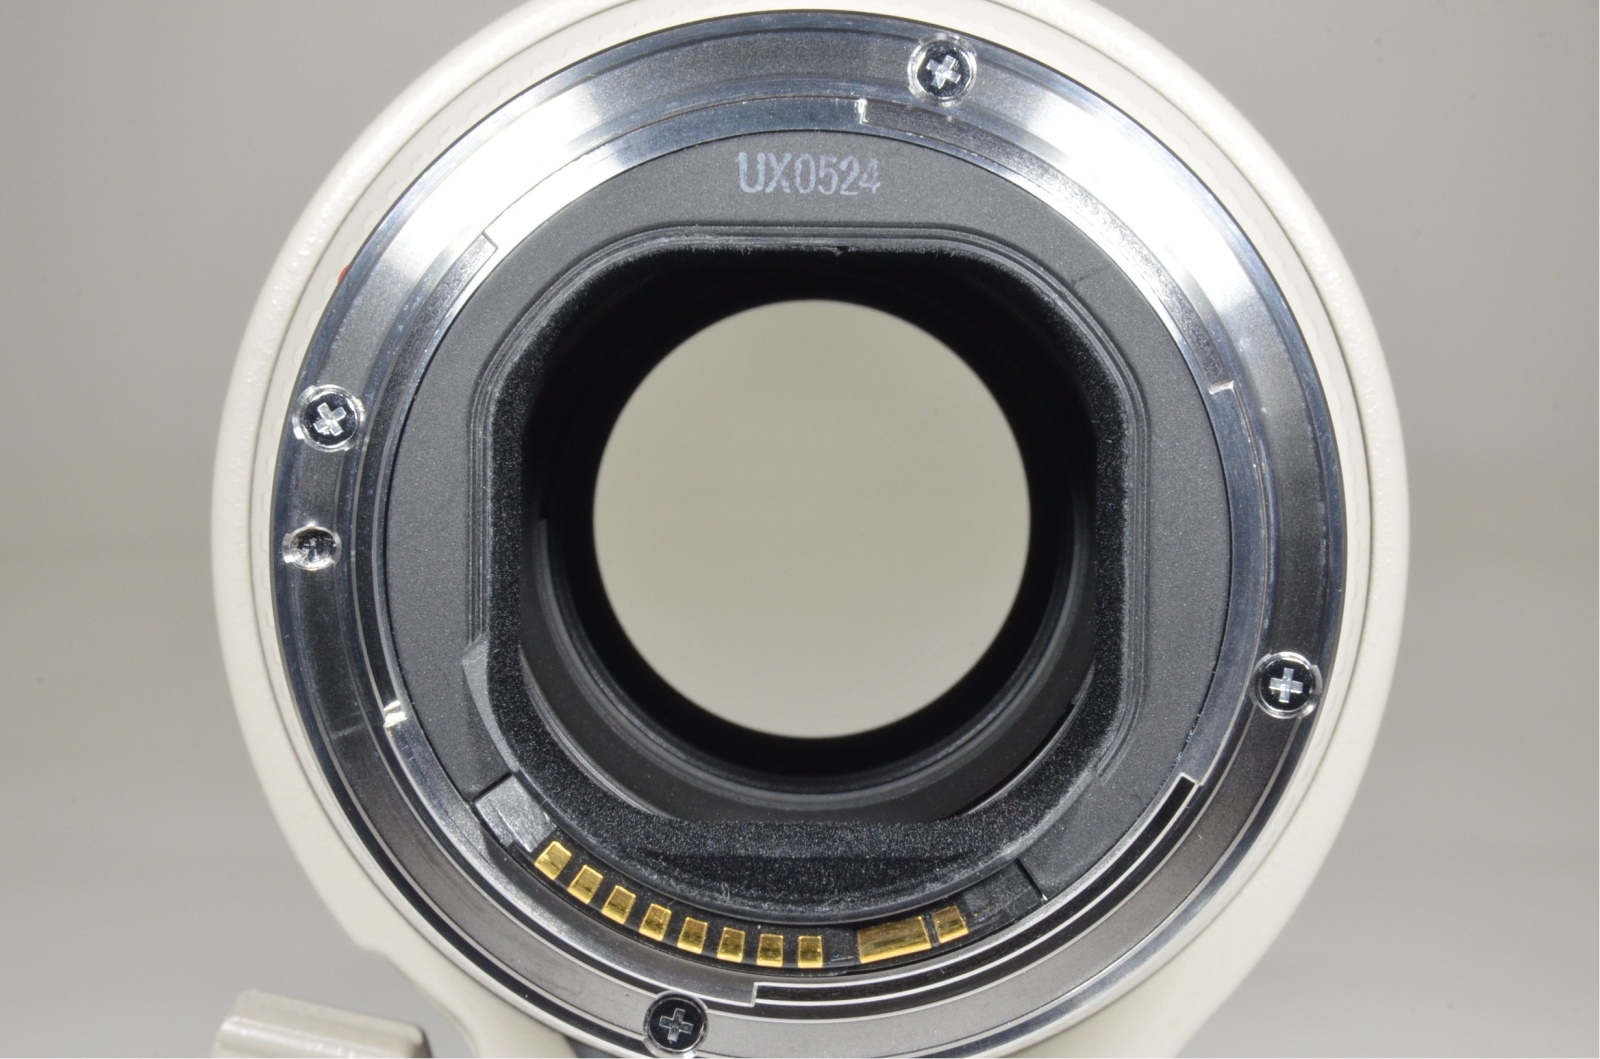 canon ef 70-200mm f/2.8 l usm ultrasonic lens with lenc case